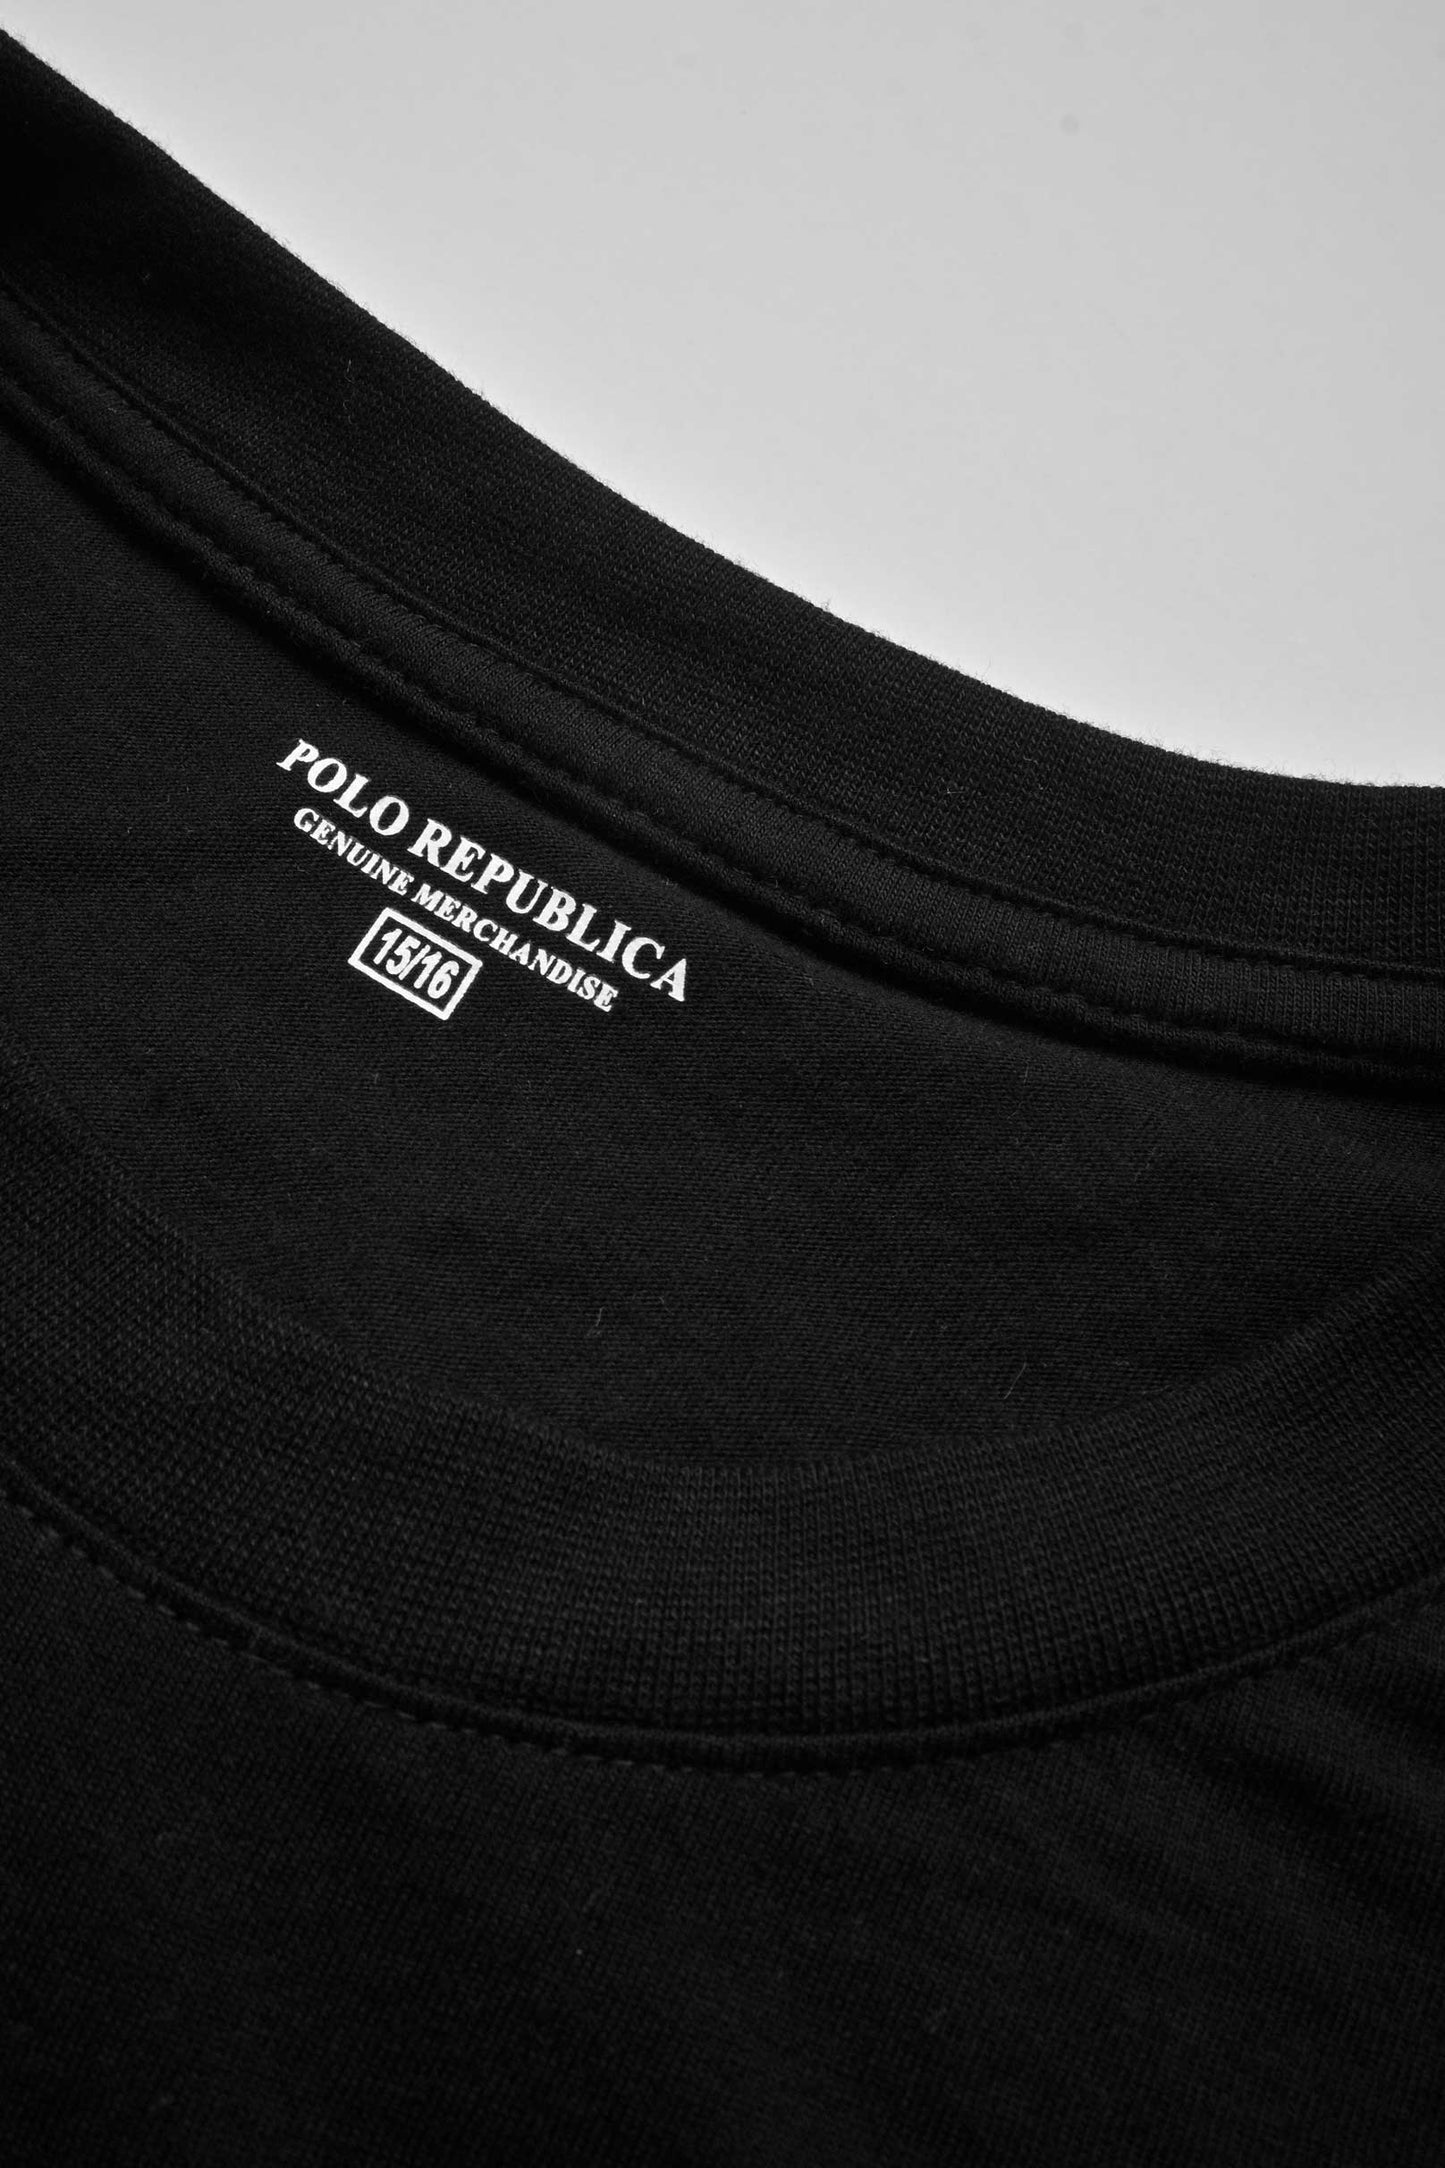 Polo Republica Boy's Eat Sleep Printed Tee Shirt